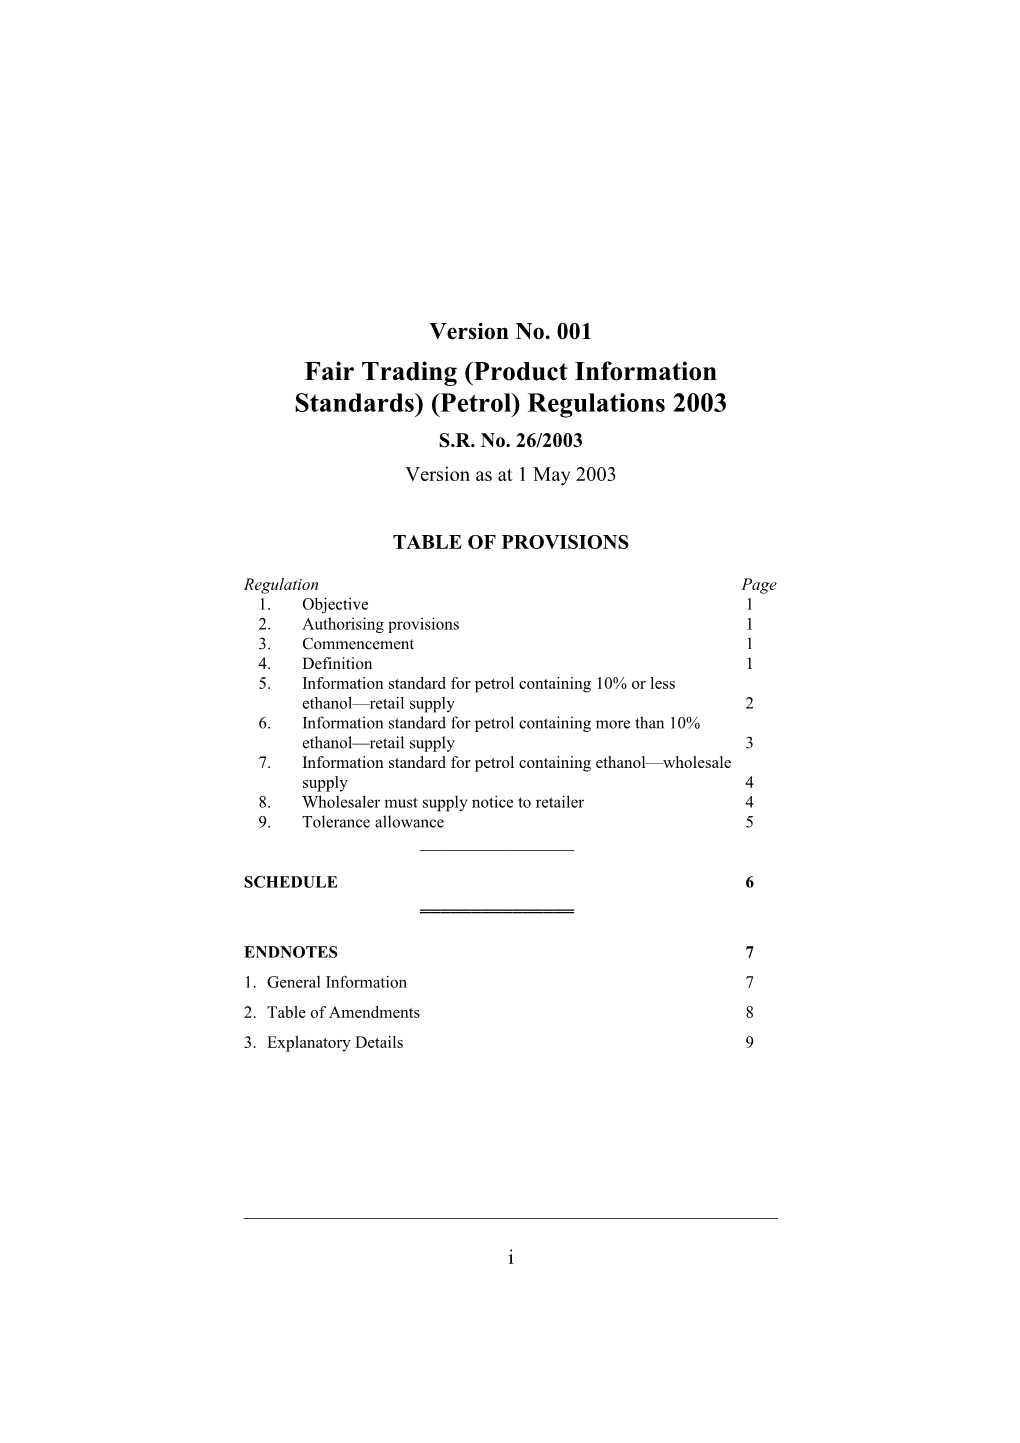 Fair Trading (Product Information Standards) (Petrol) Regulations 2003